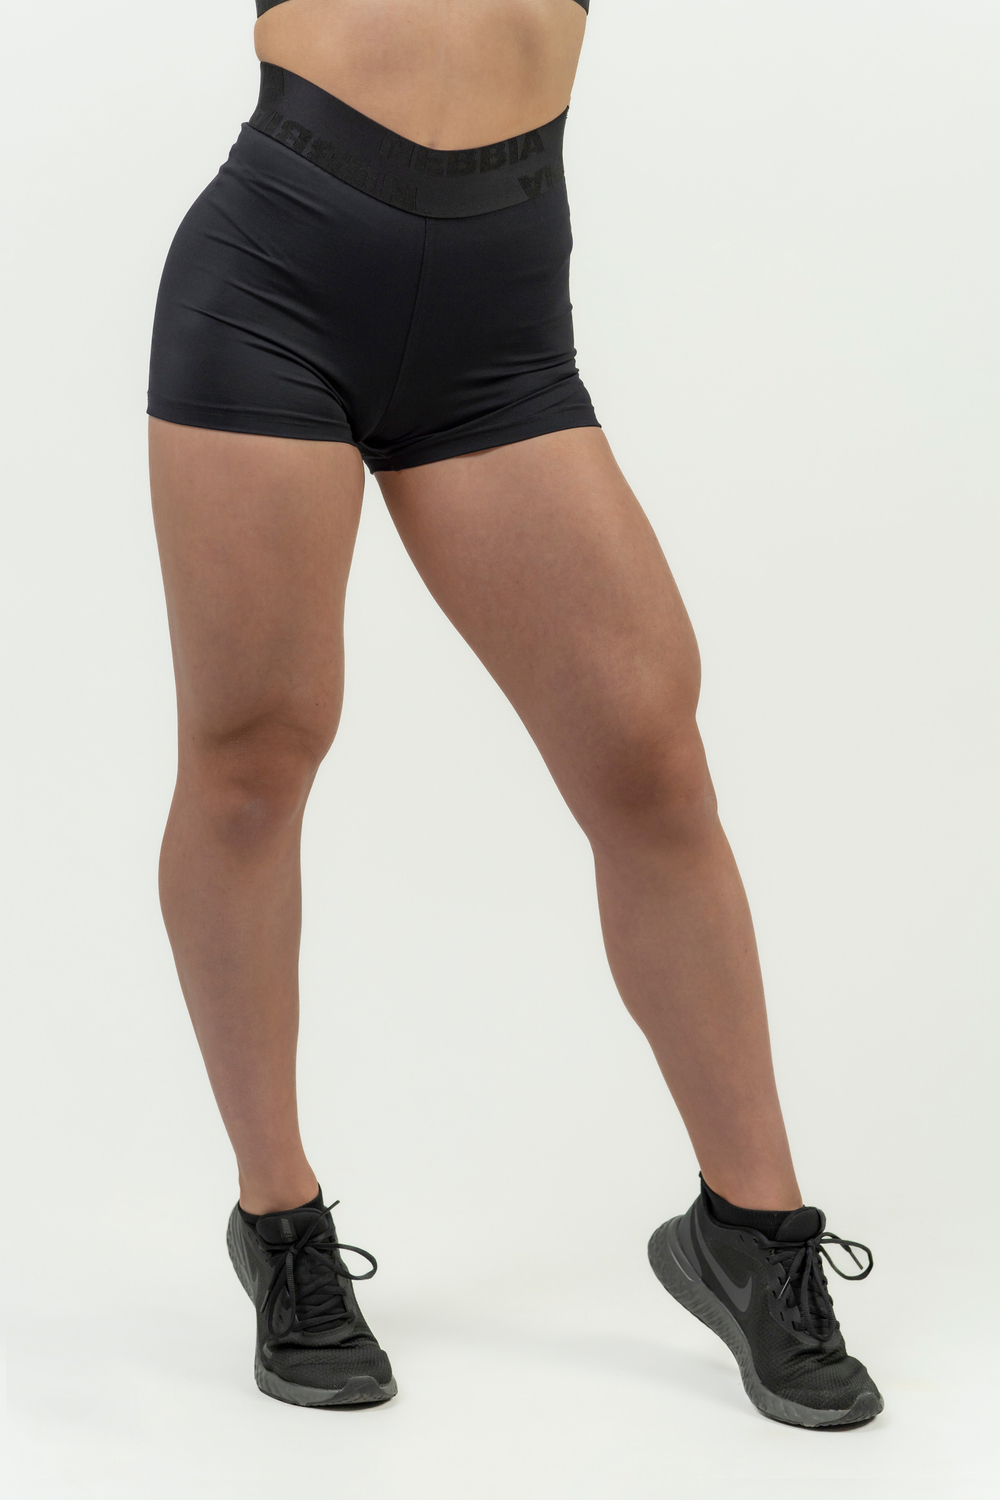 Женские шорты NEBBIA Women's Compression High Waist Shorts INTENSE Leg Day 832 Black